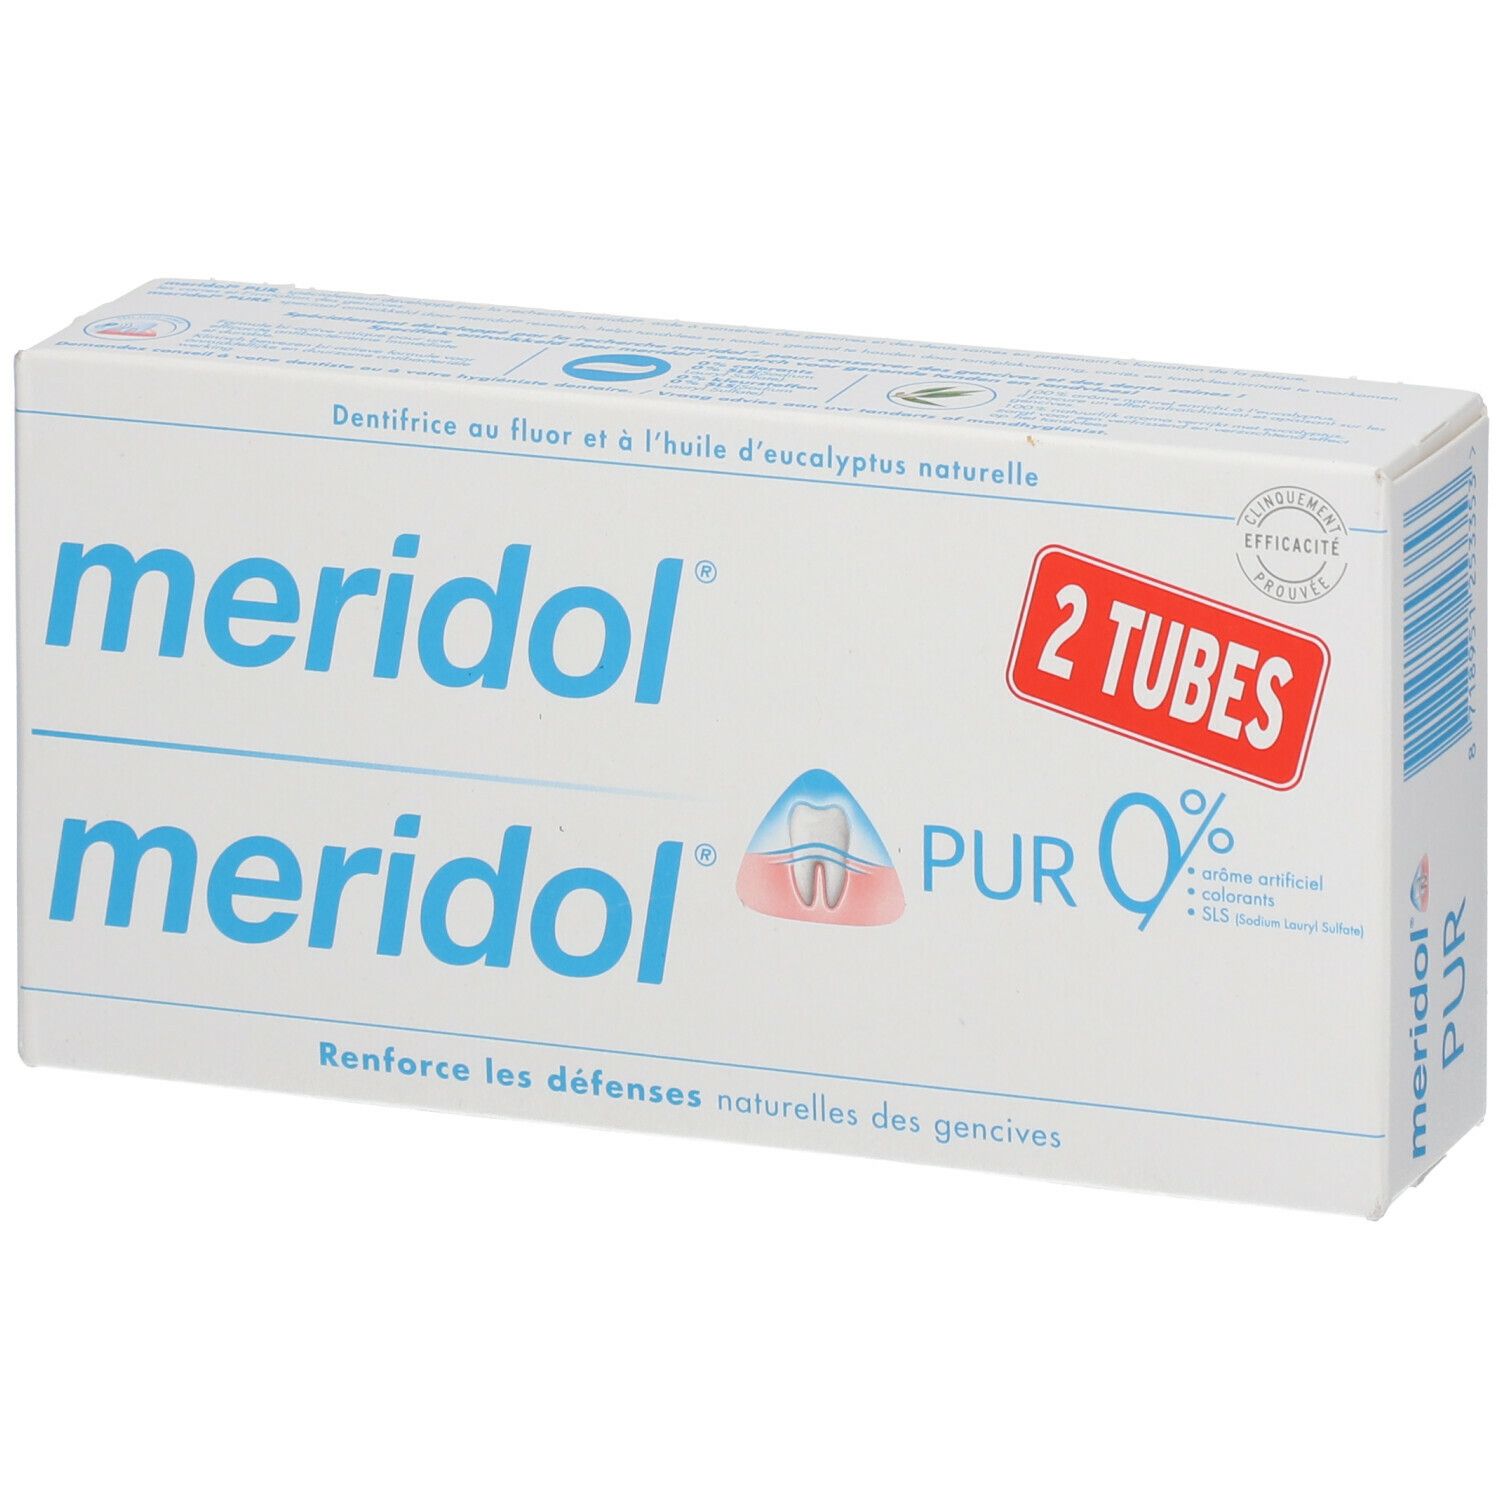 meridol® PUR 0 % Dentifrice